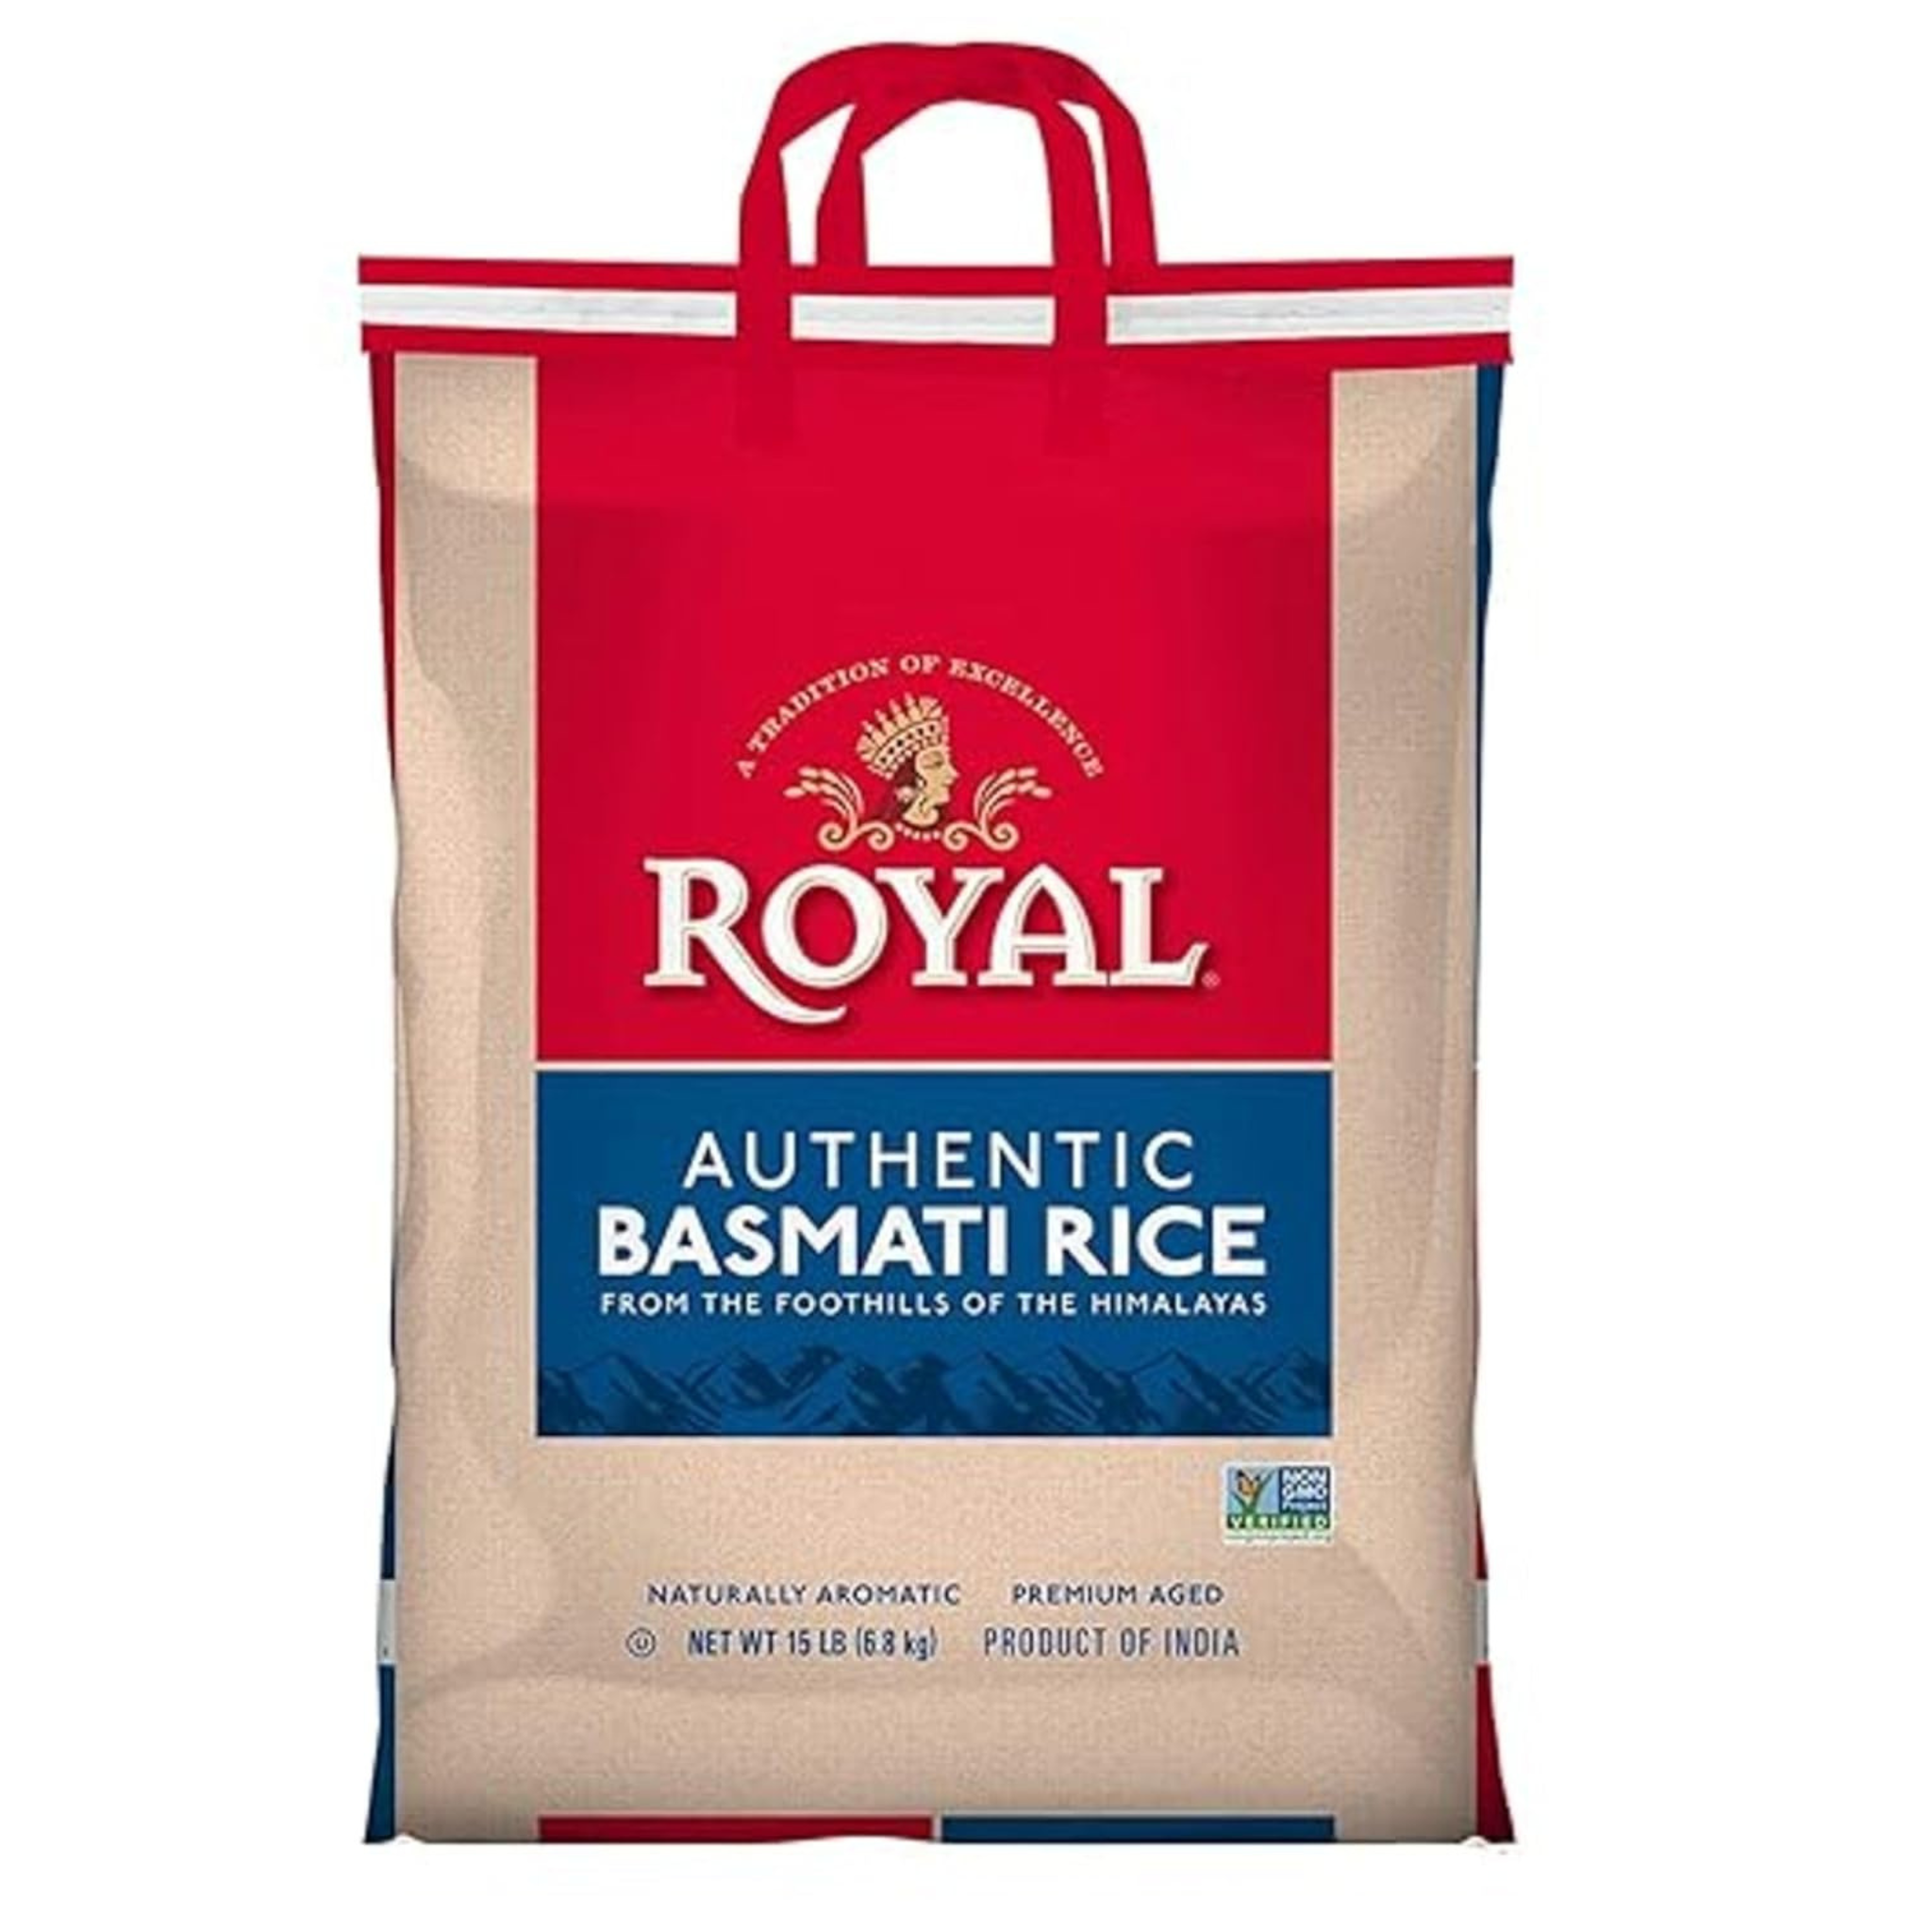 15-Pound Bag of Royal Authentic Basmati Rice